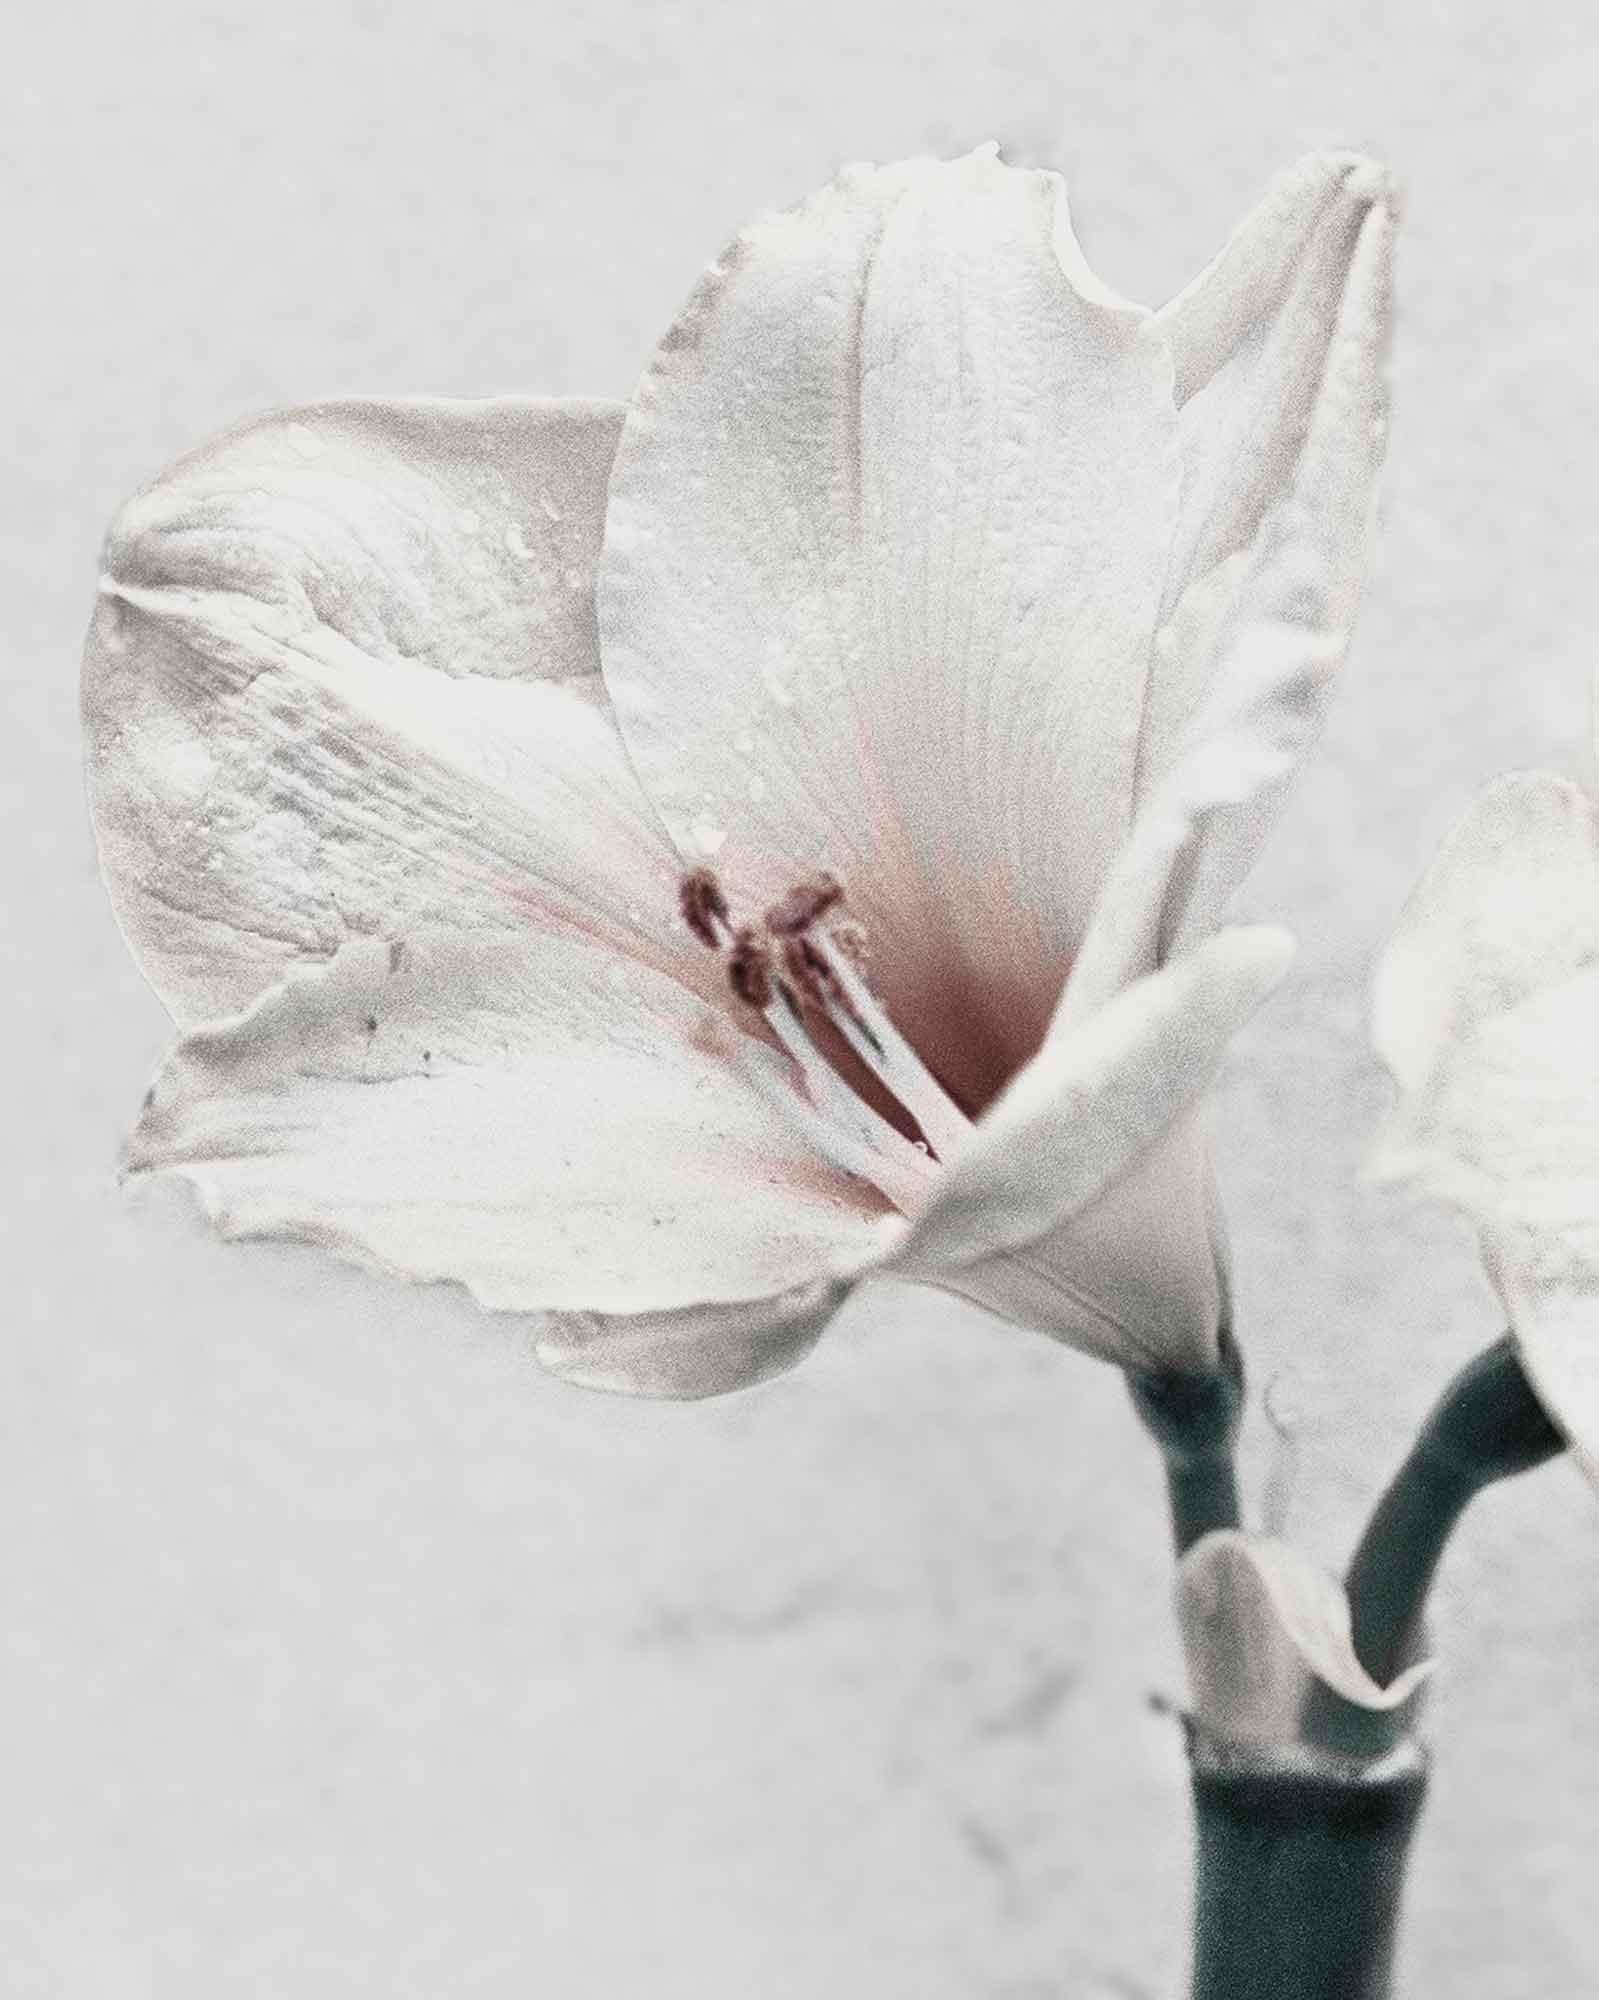 Botanica #5 (Amaryllis) - Photograph by Vee Speers